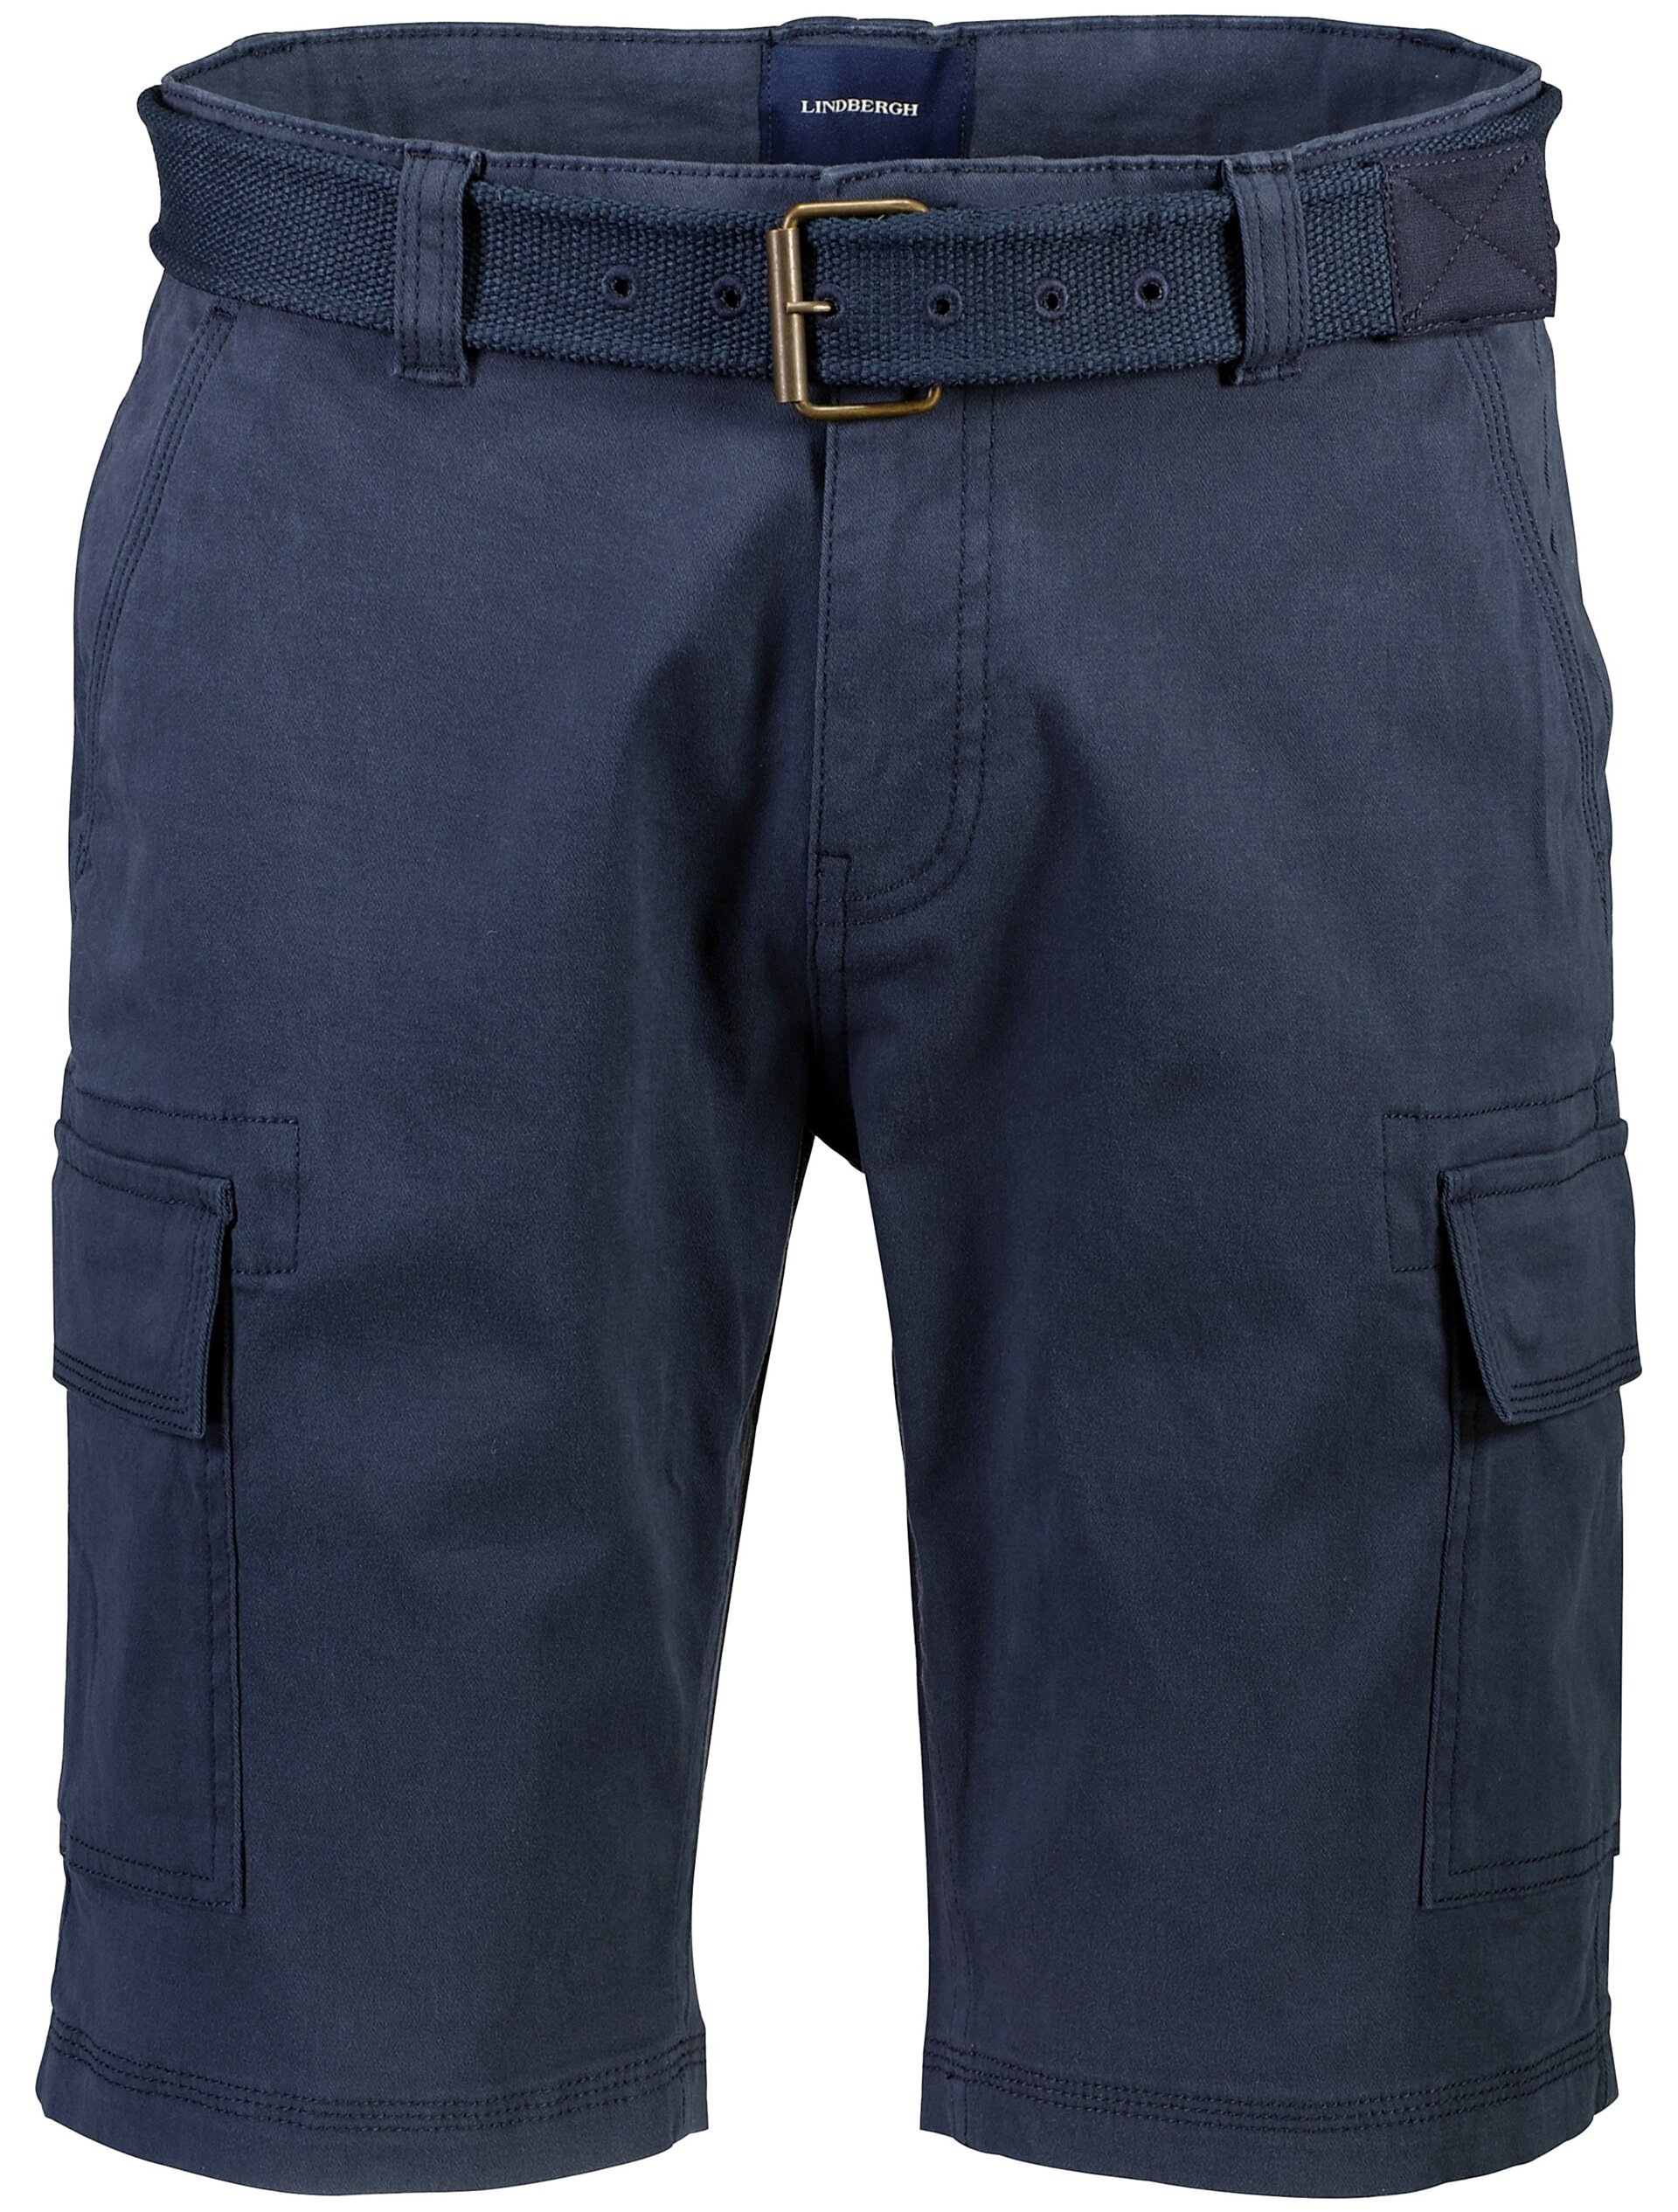 Lindbergh Cargo shorts blue / navy